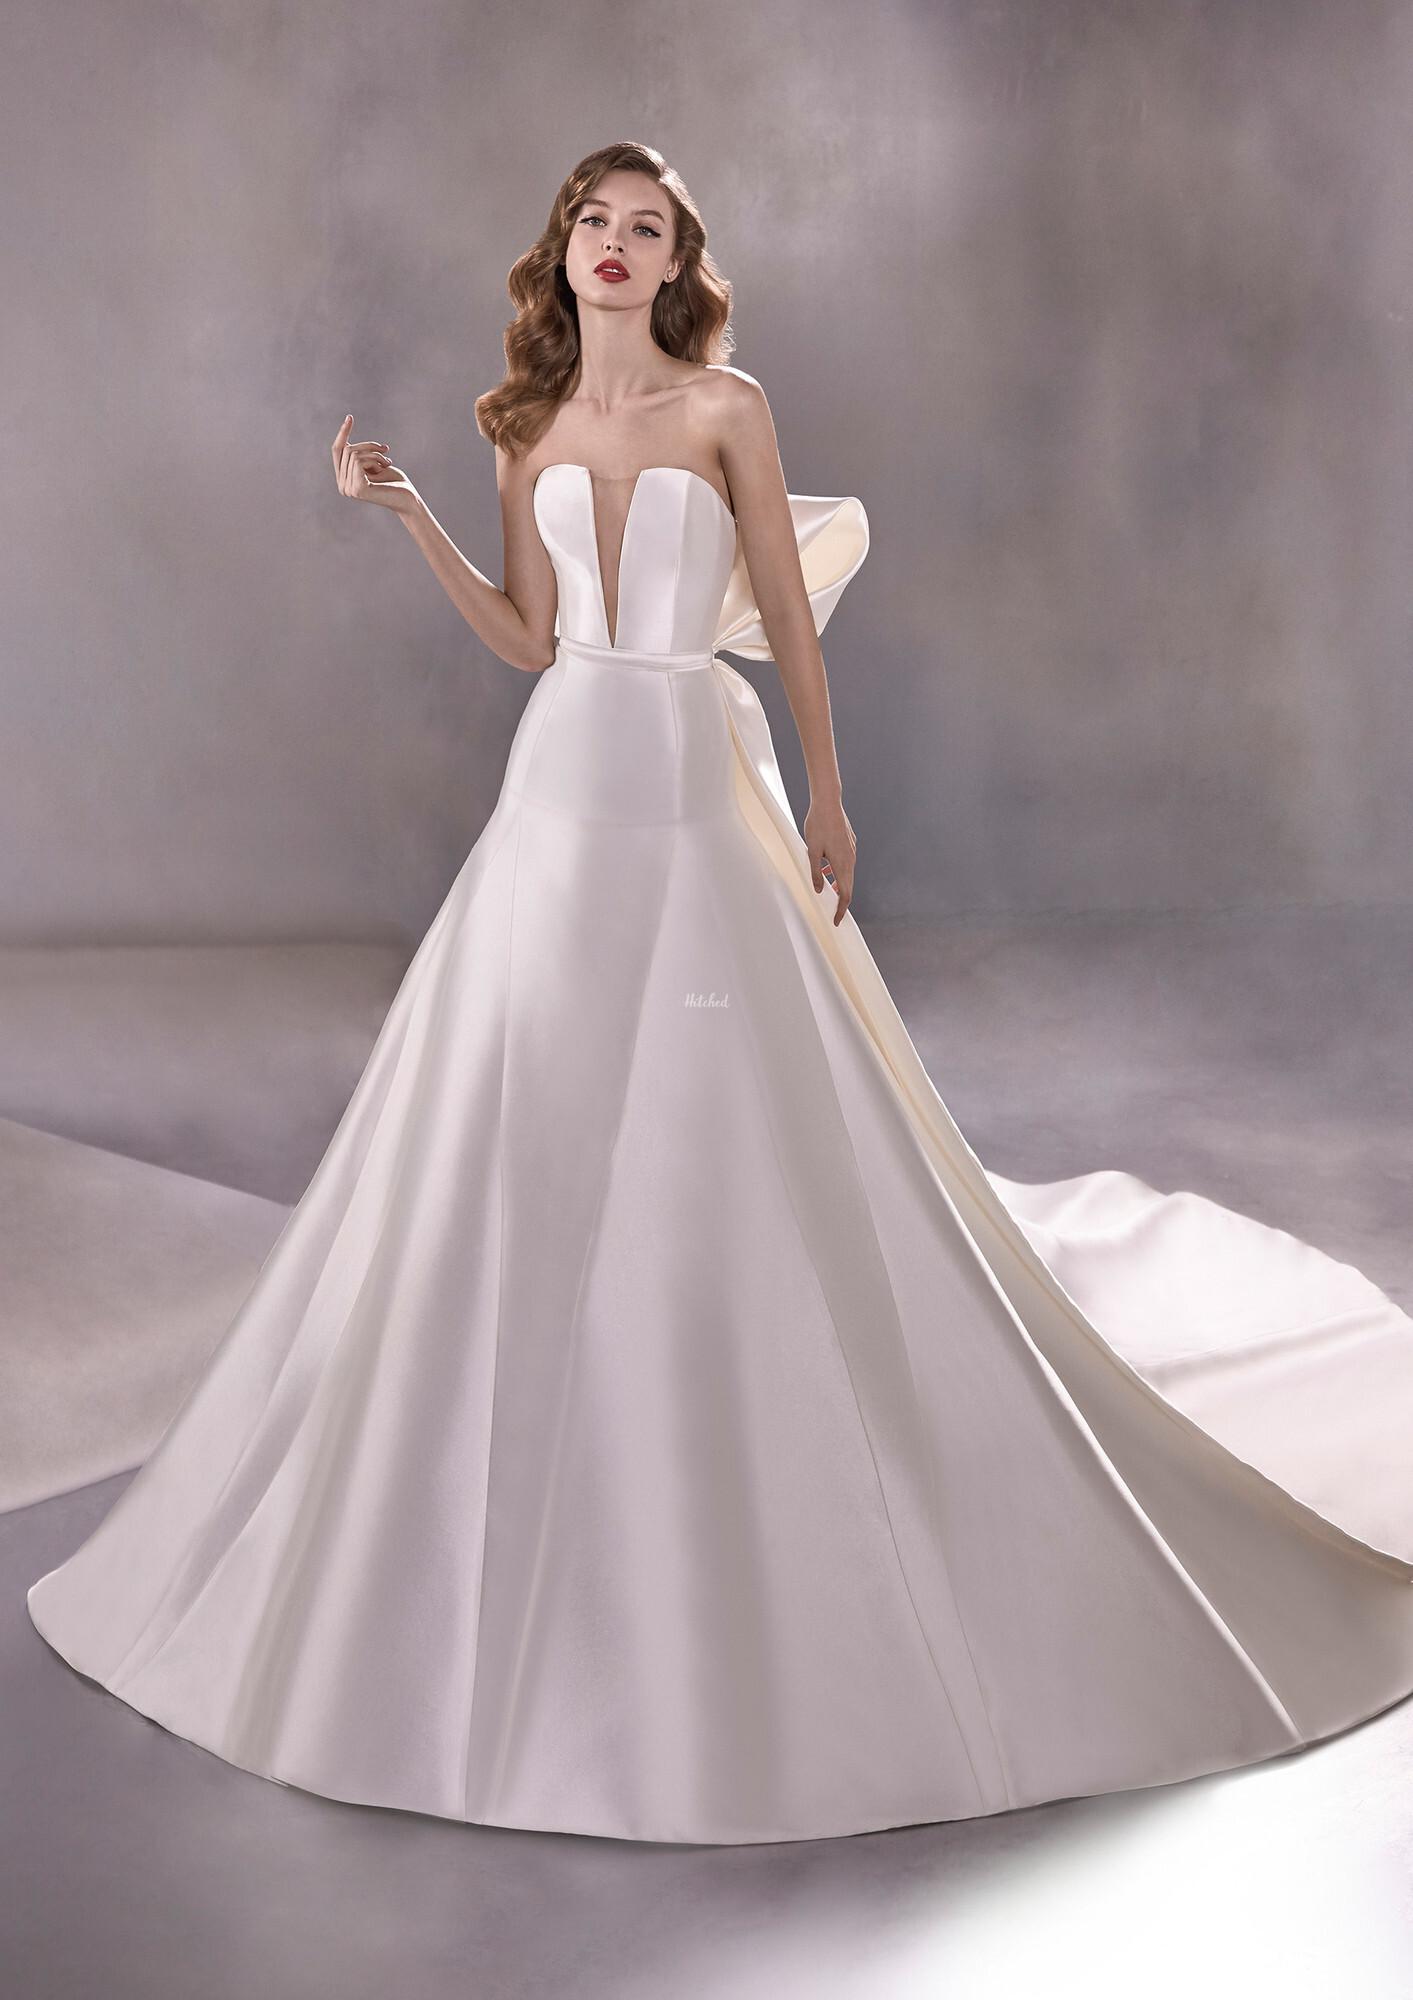 ESTRELLA Wedding Dress from Atelier Pronovias - hitched.co.uk